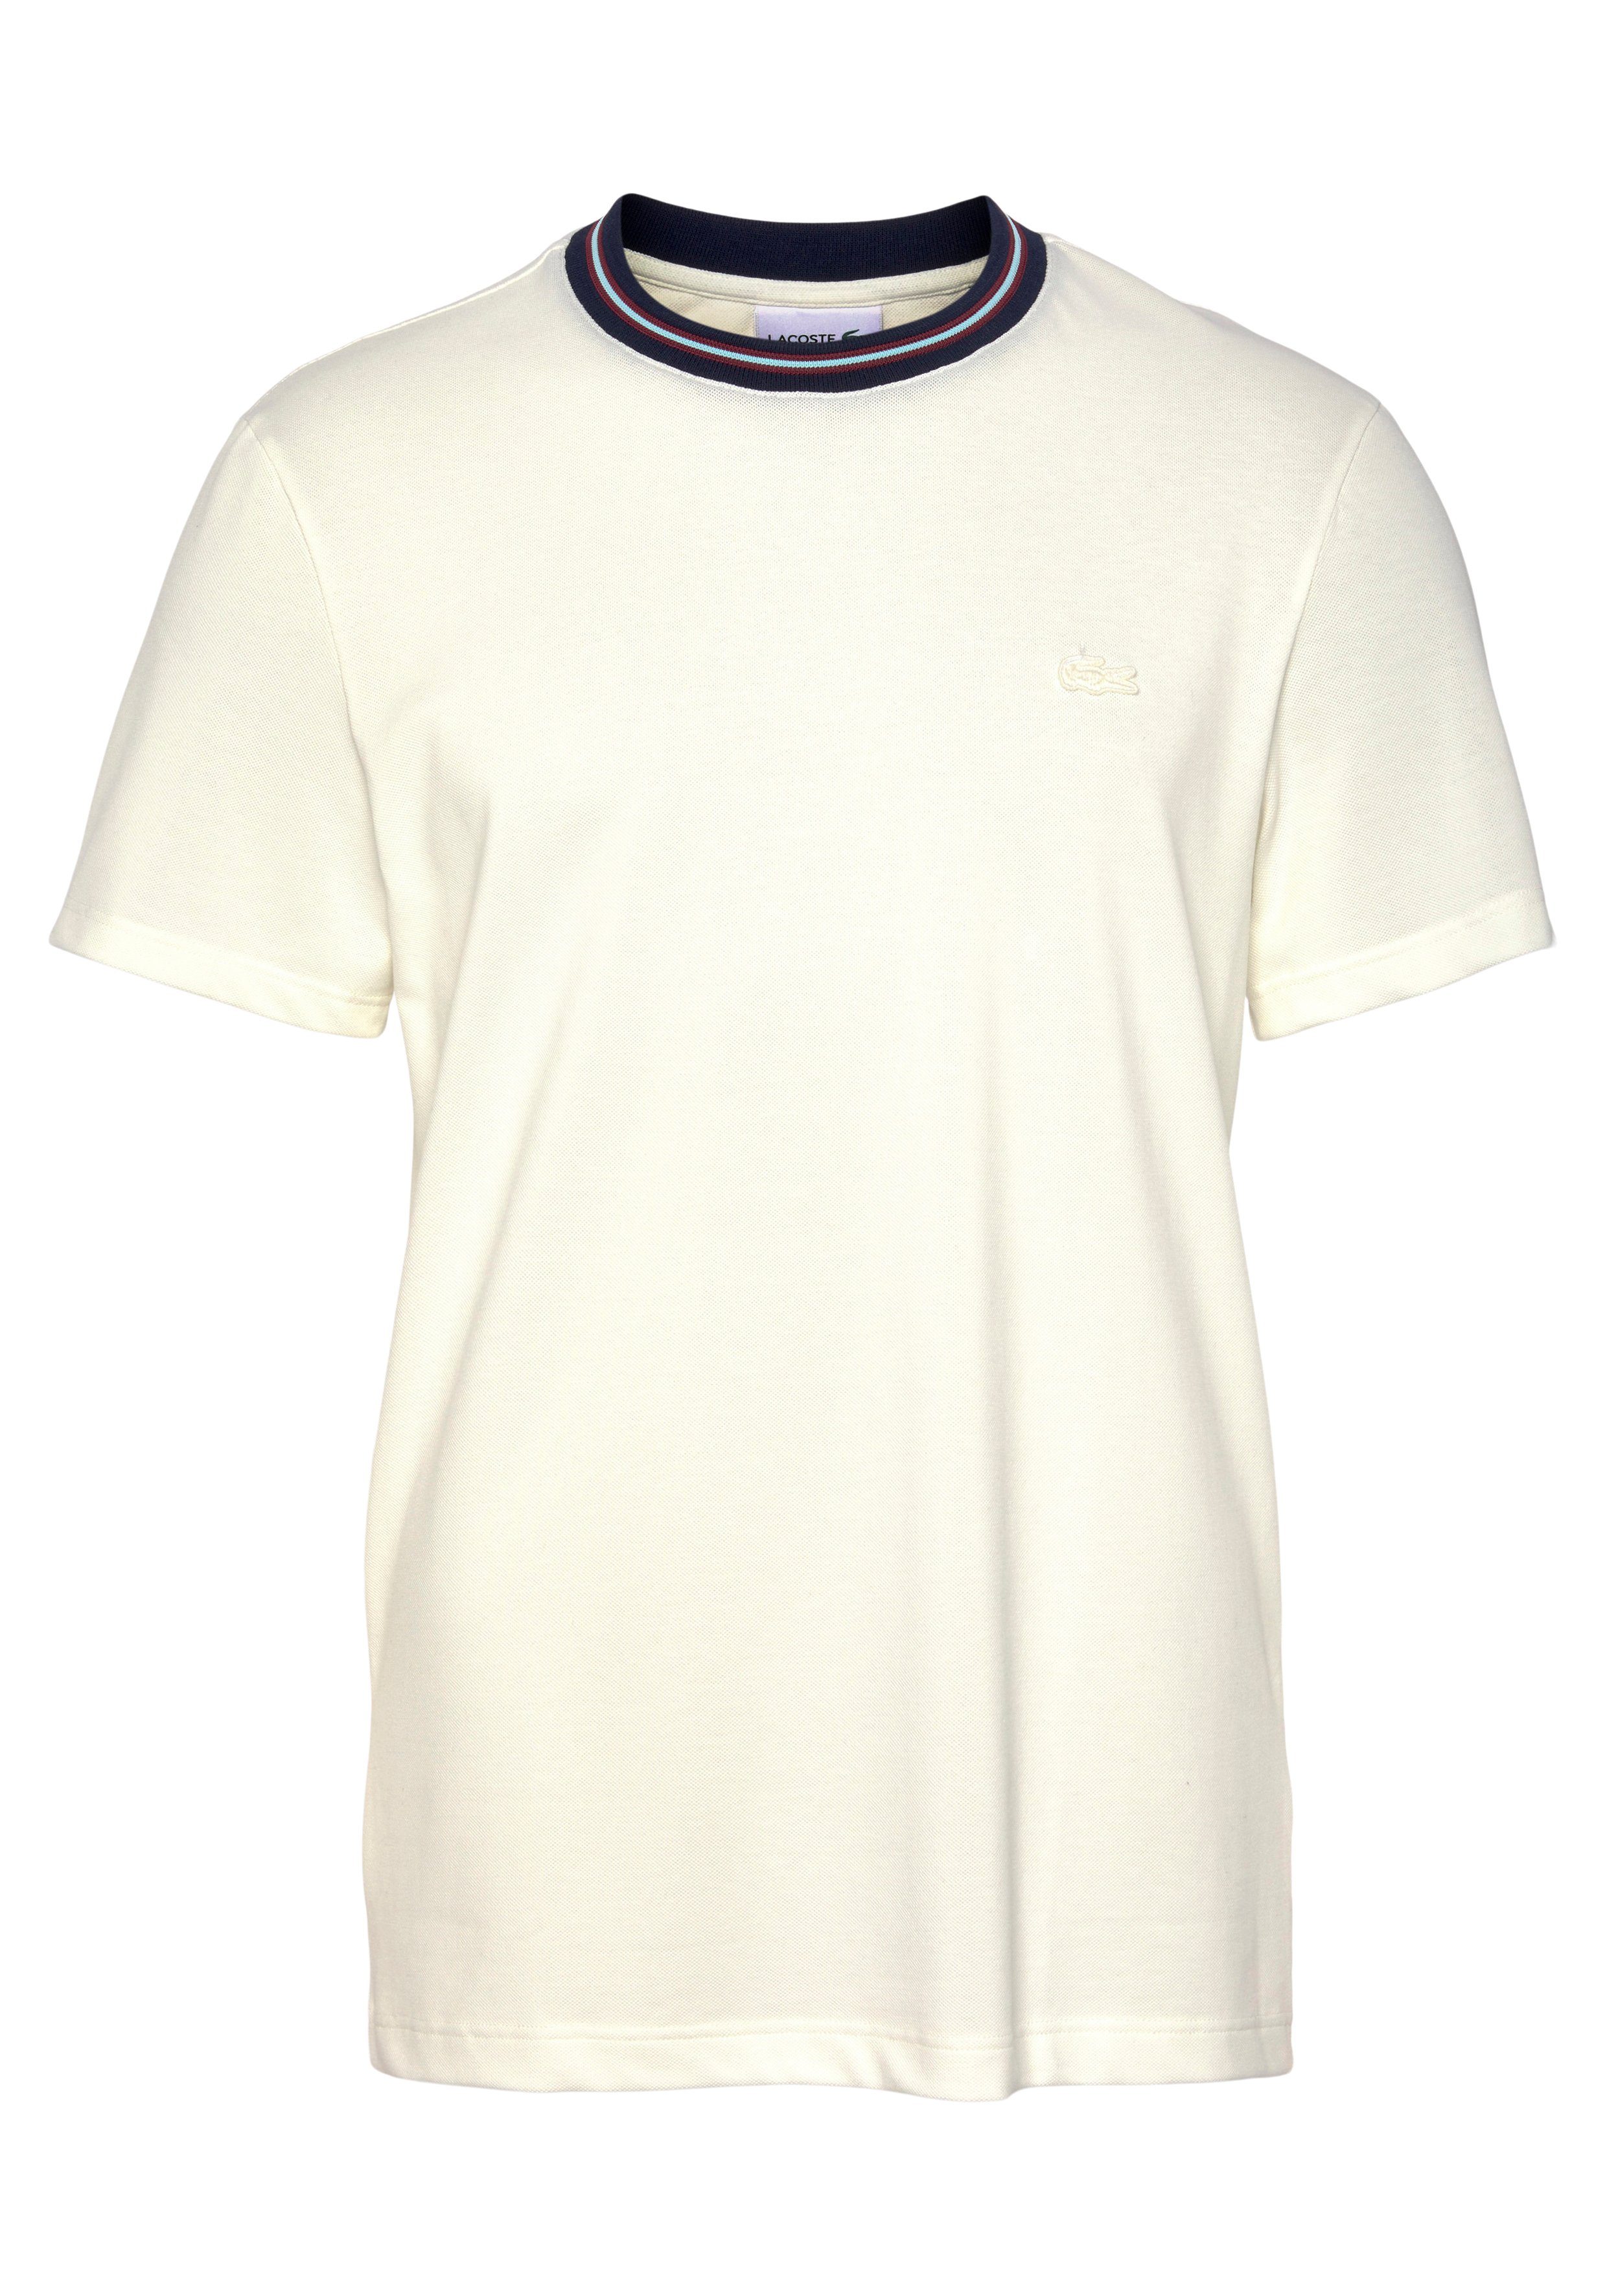 Rundhalsausschnitt, mit T-Shirt am T-SHIRT Details Mit Lacoste Ausschnitt kontrastfarbenen